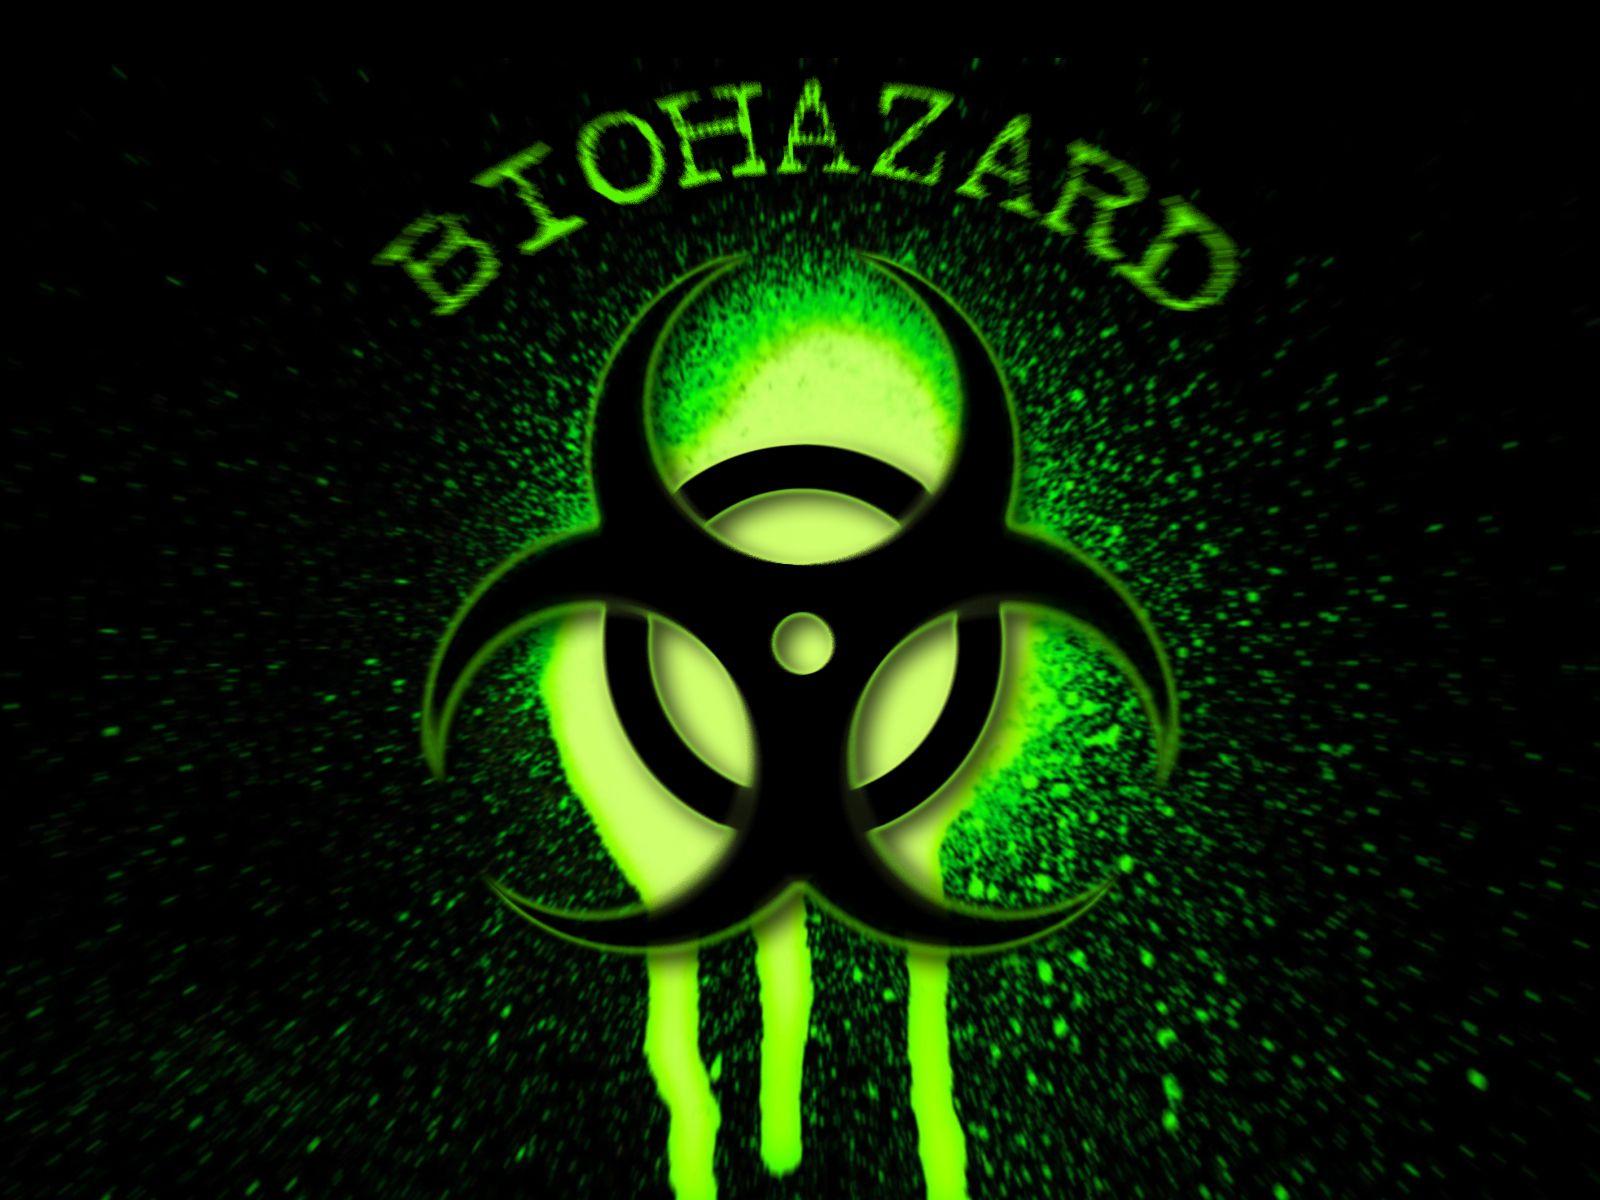 Biohazard symbols ideas. biohazard symbol, biohazard, biohazard tattoo